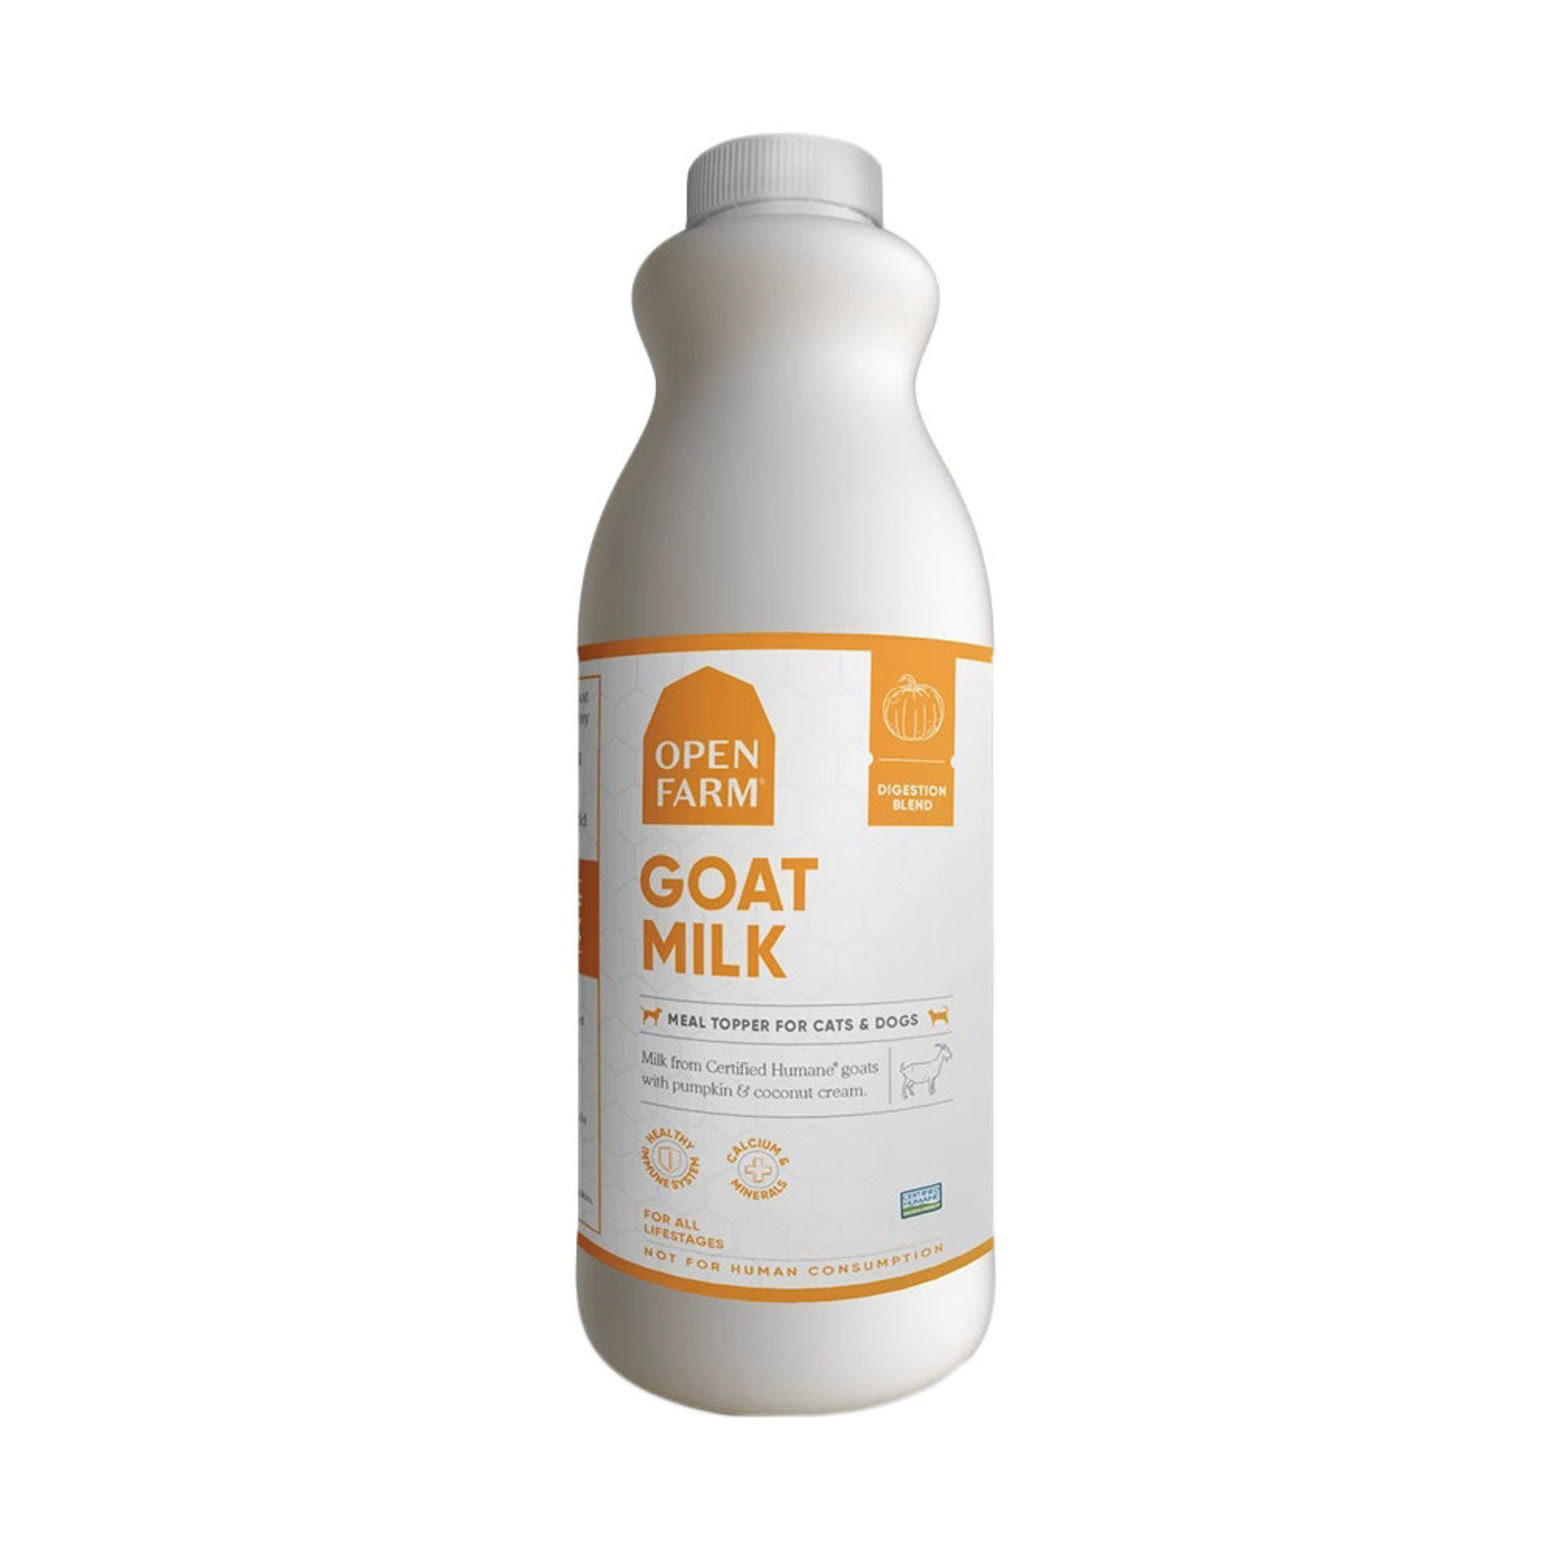 Open Farm Goat Milk Digestion Blend - 30 oz